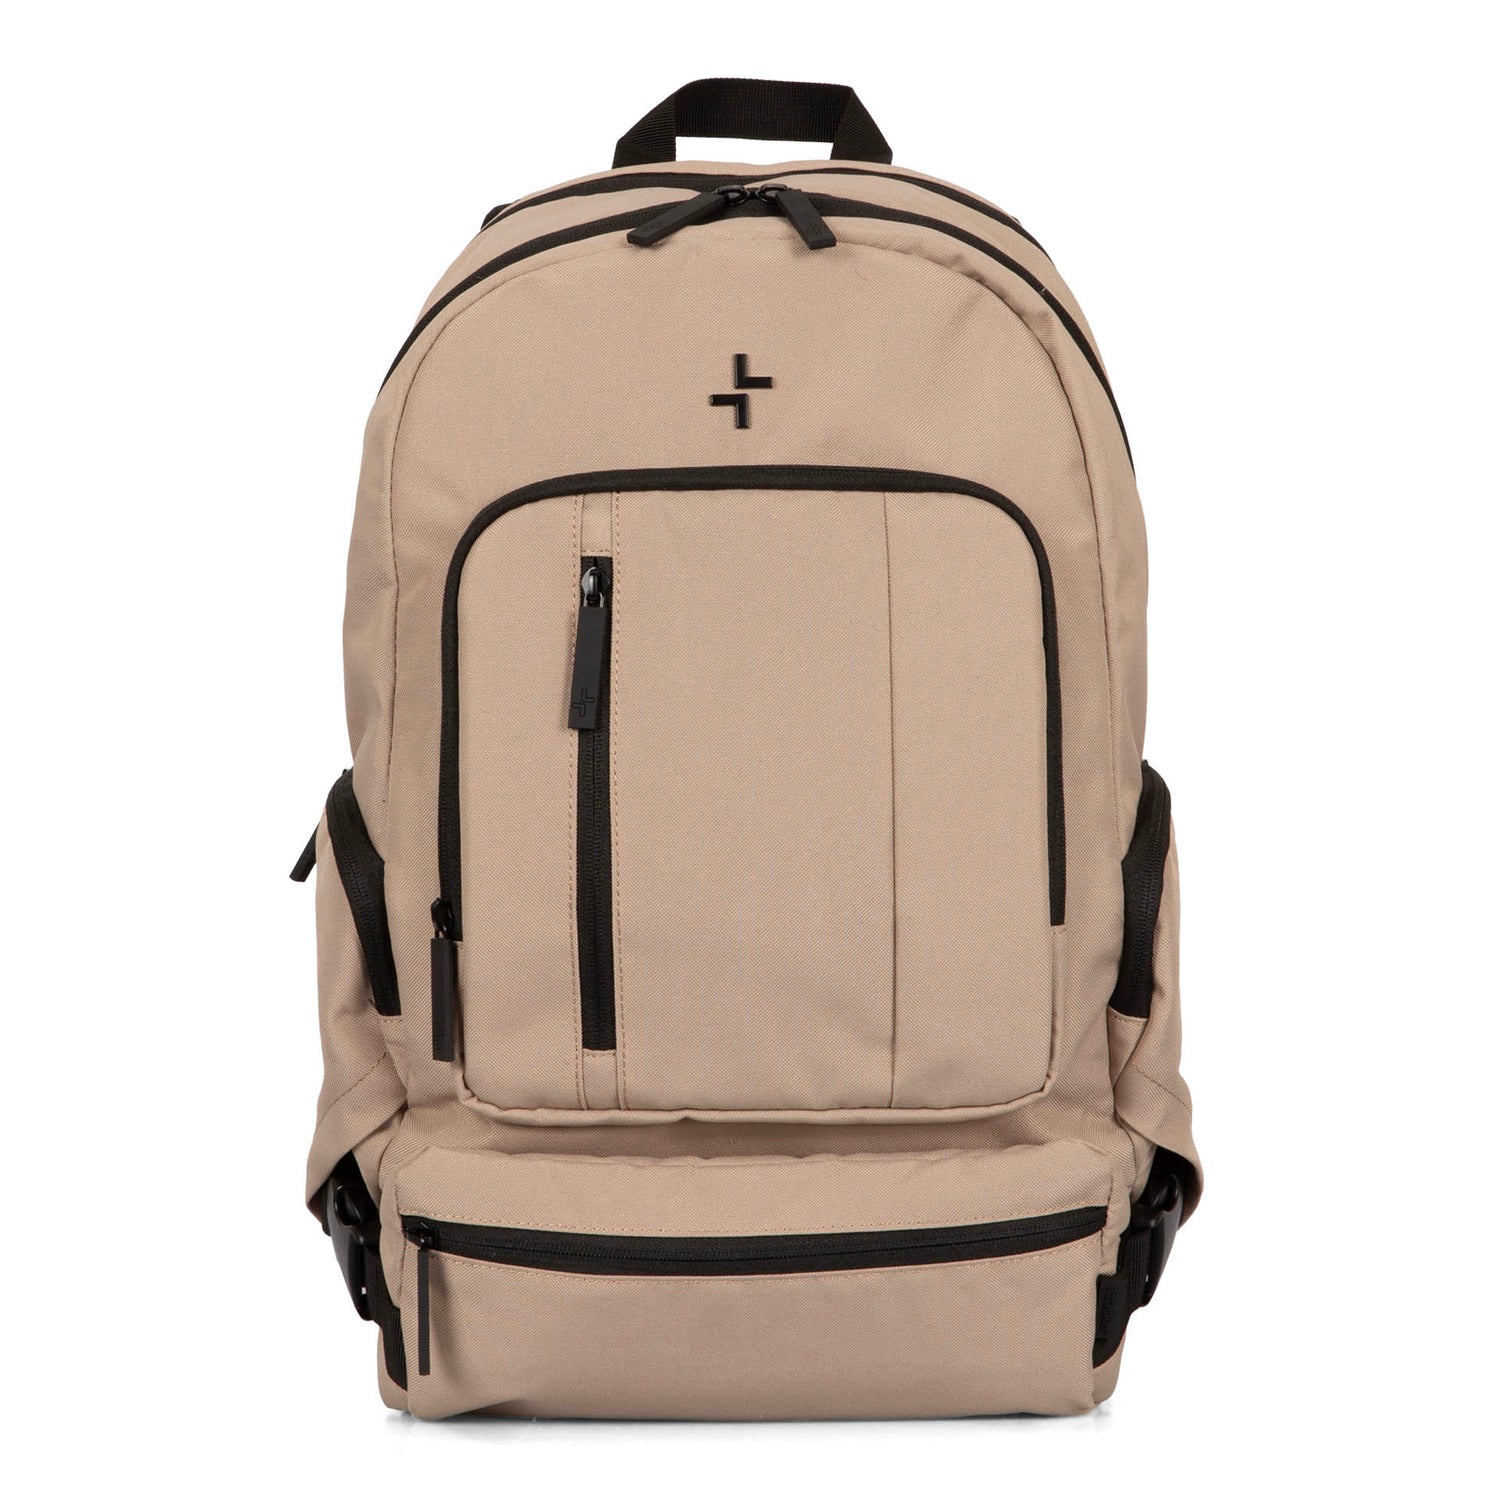 Nelson 17" Laptop Backpack - Bentley